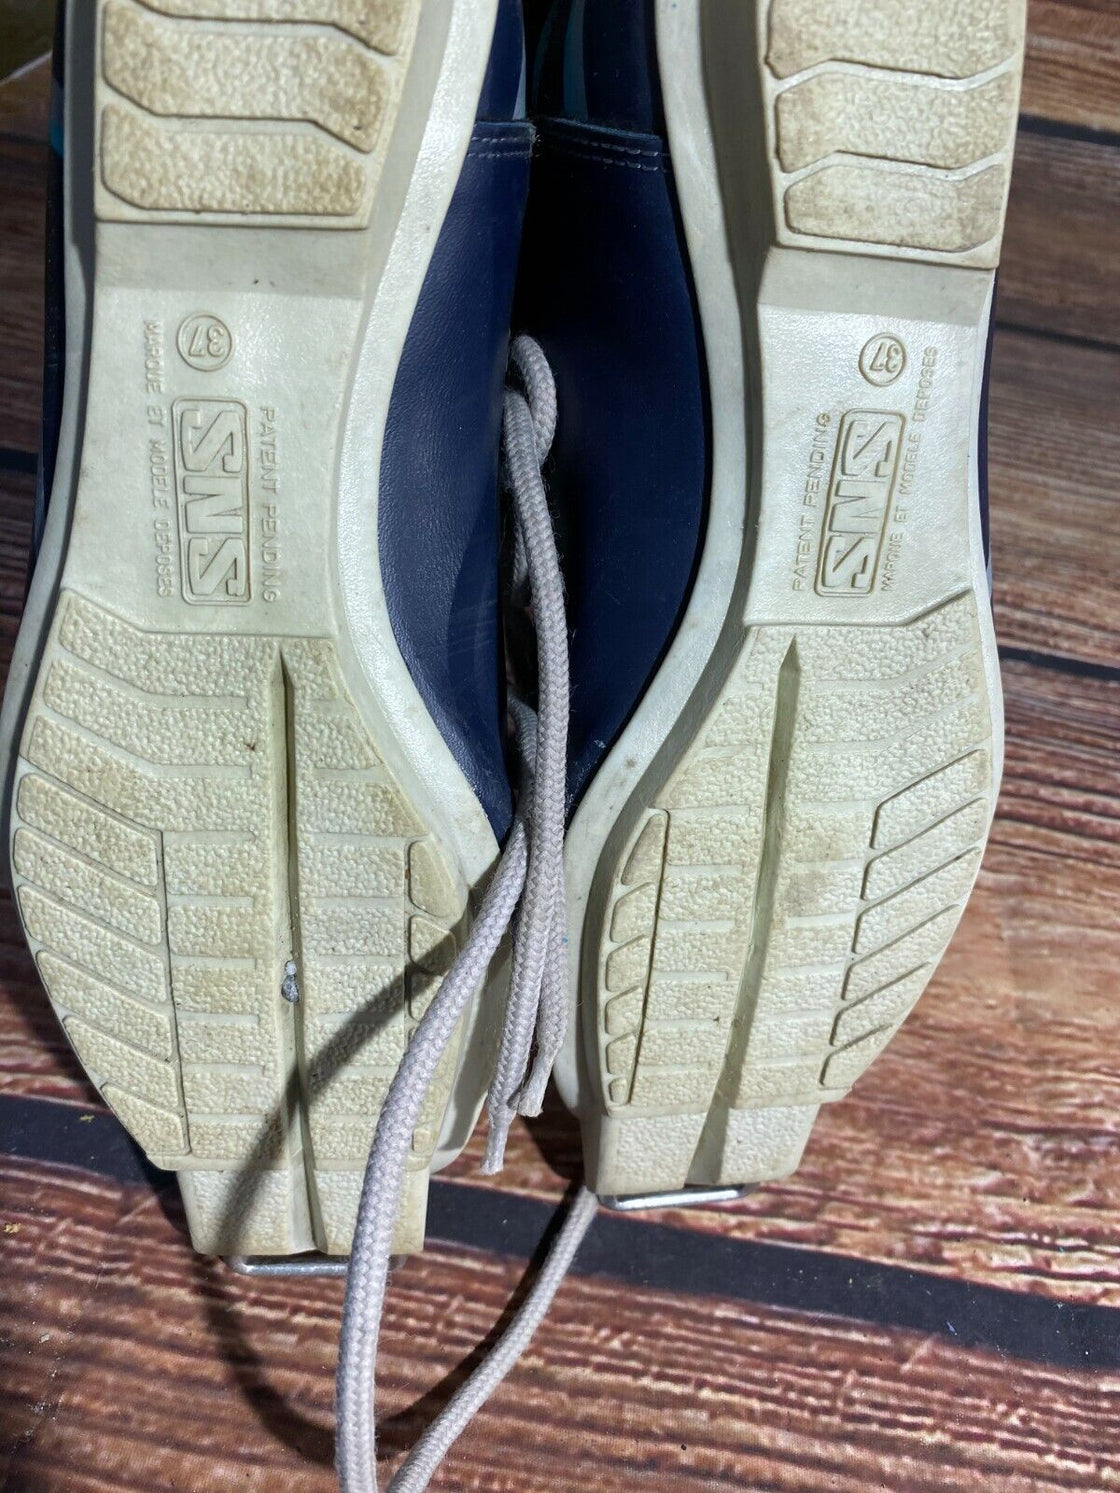 AALTONEN Vintage Nordic Cross Country Ski Boots Size EU37 US5 SNS Old Bindings